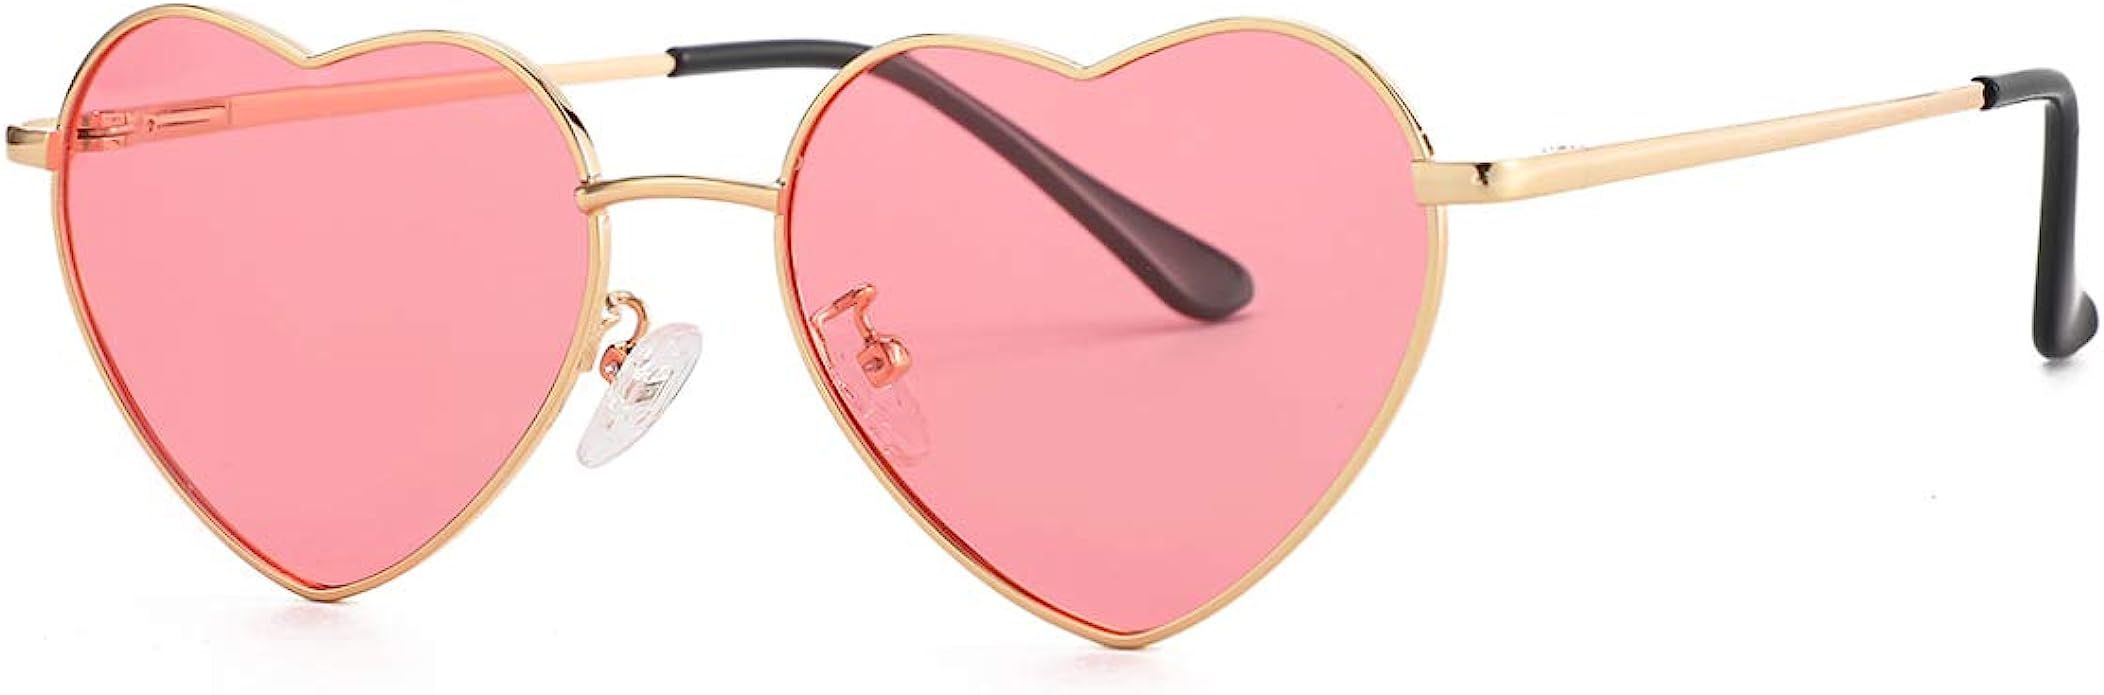 Polarized Heart Shaped Sunglasses for Women Metal Frame Cute Lovely Glasses 100% UV Protection | Amazon (US)